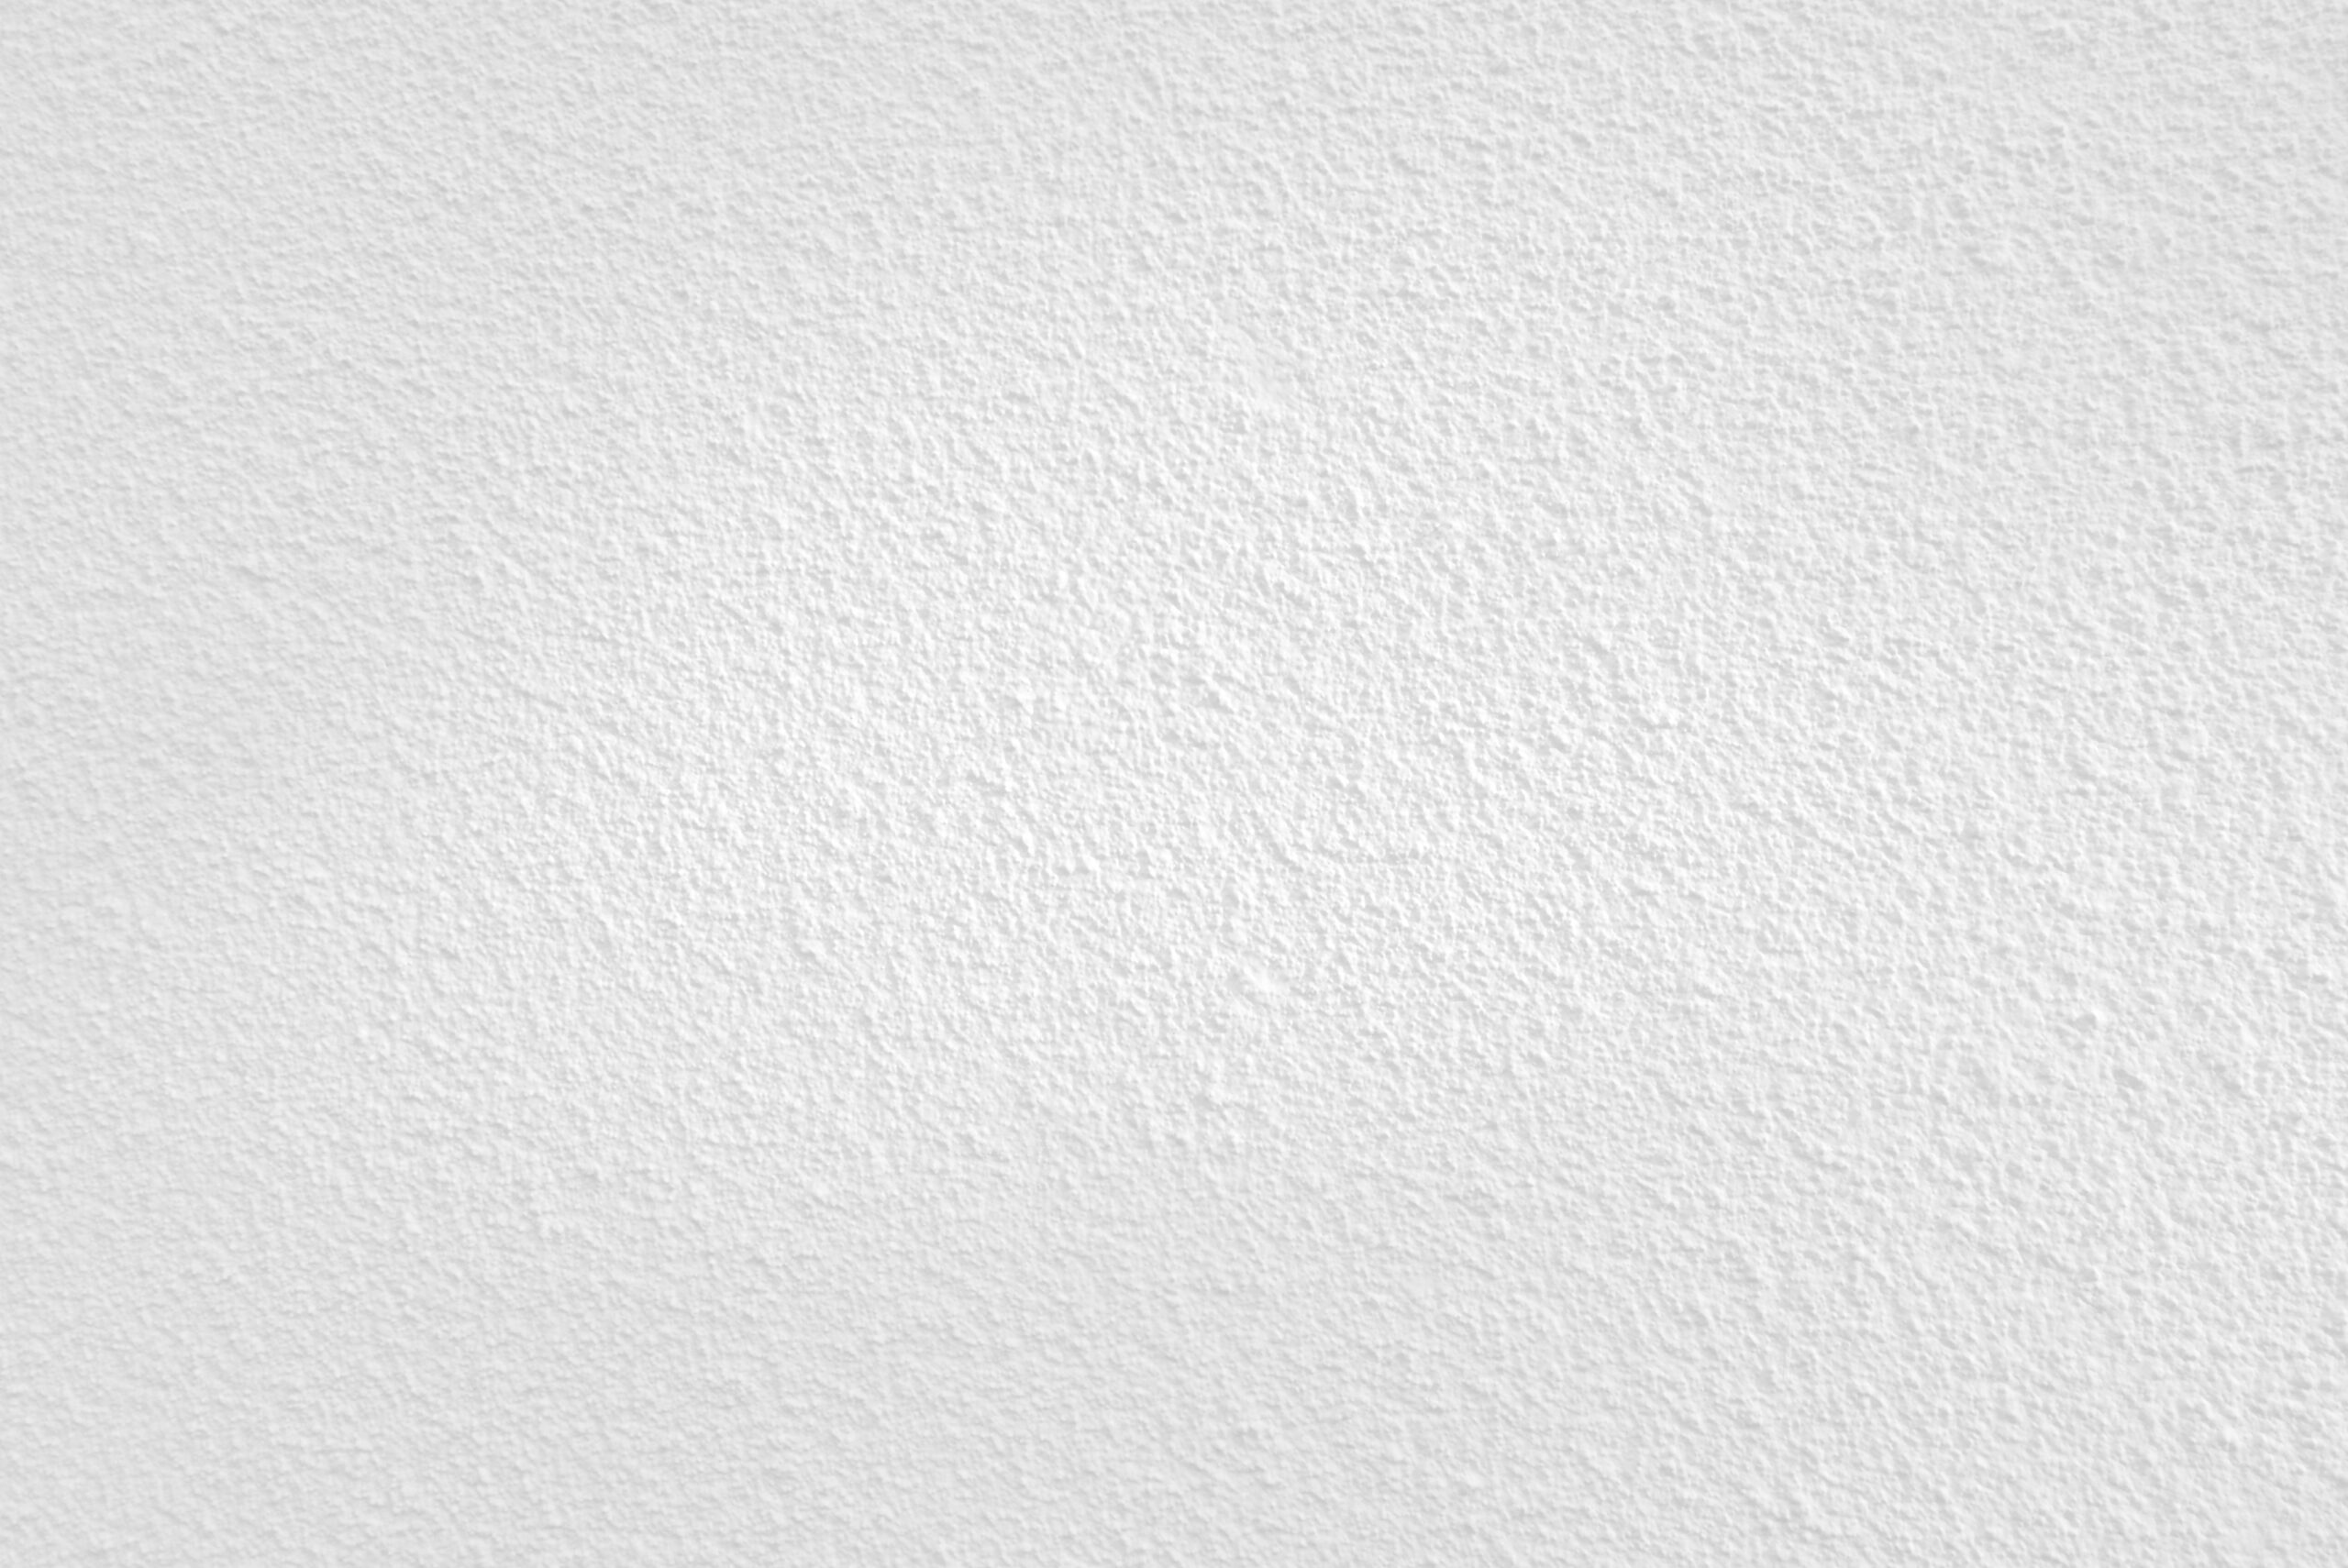 textura transparente pared cemento blanco superficie rugosa espacio texto fondox9 scaled